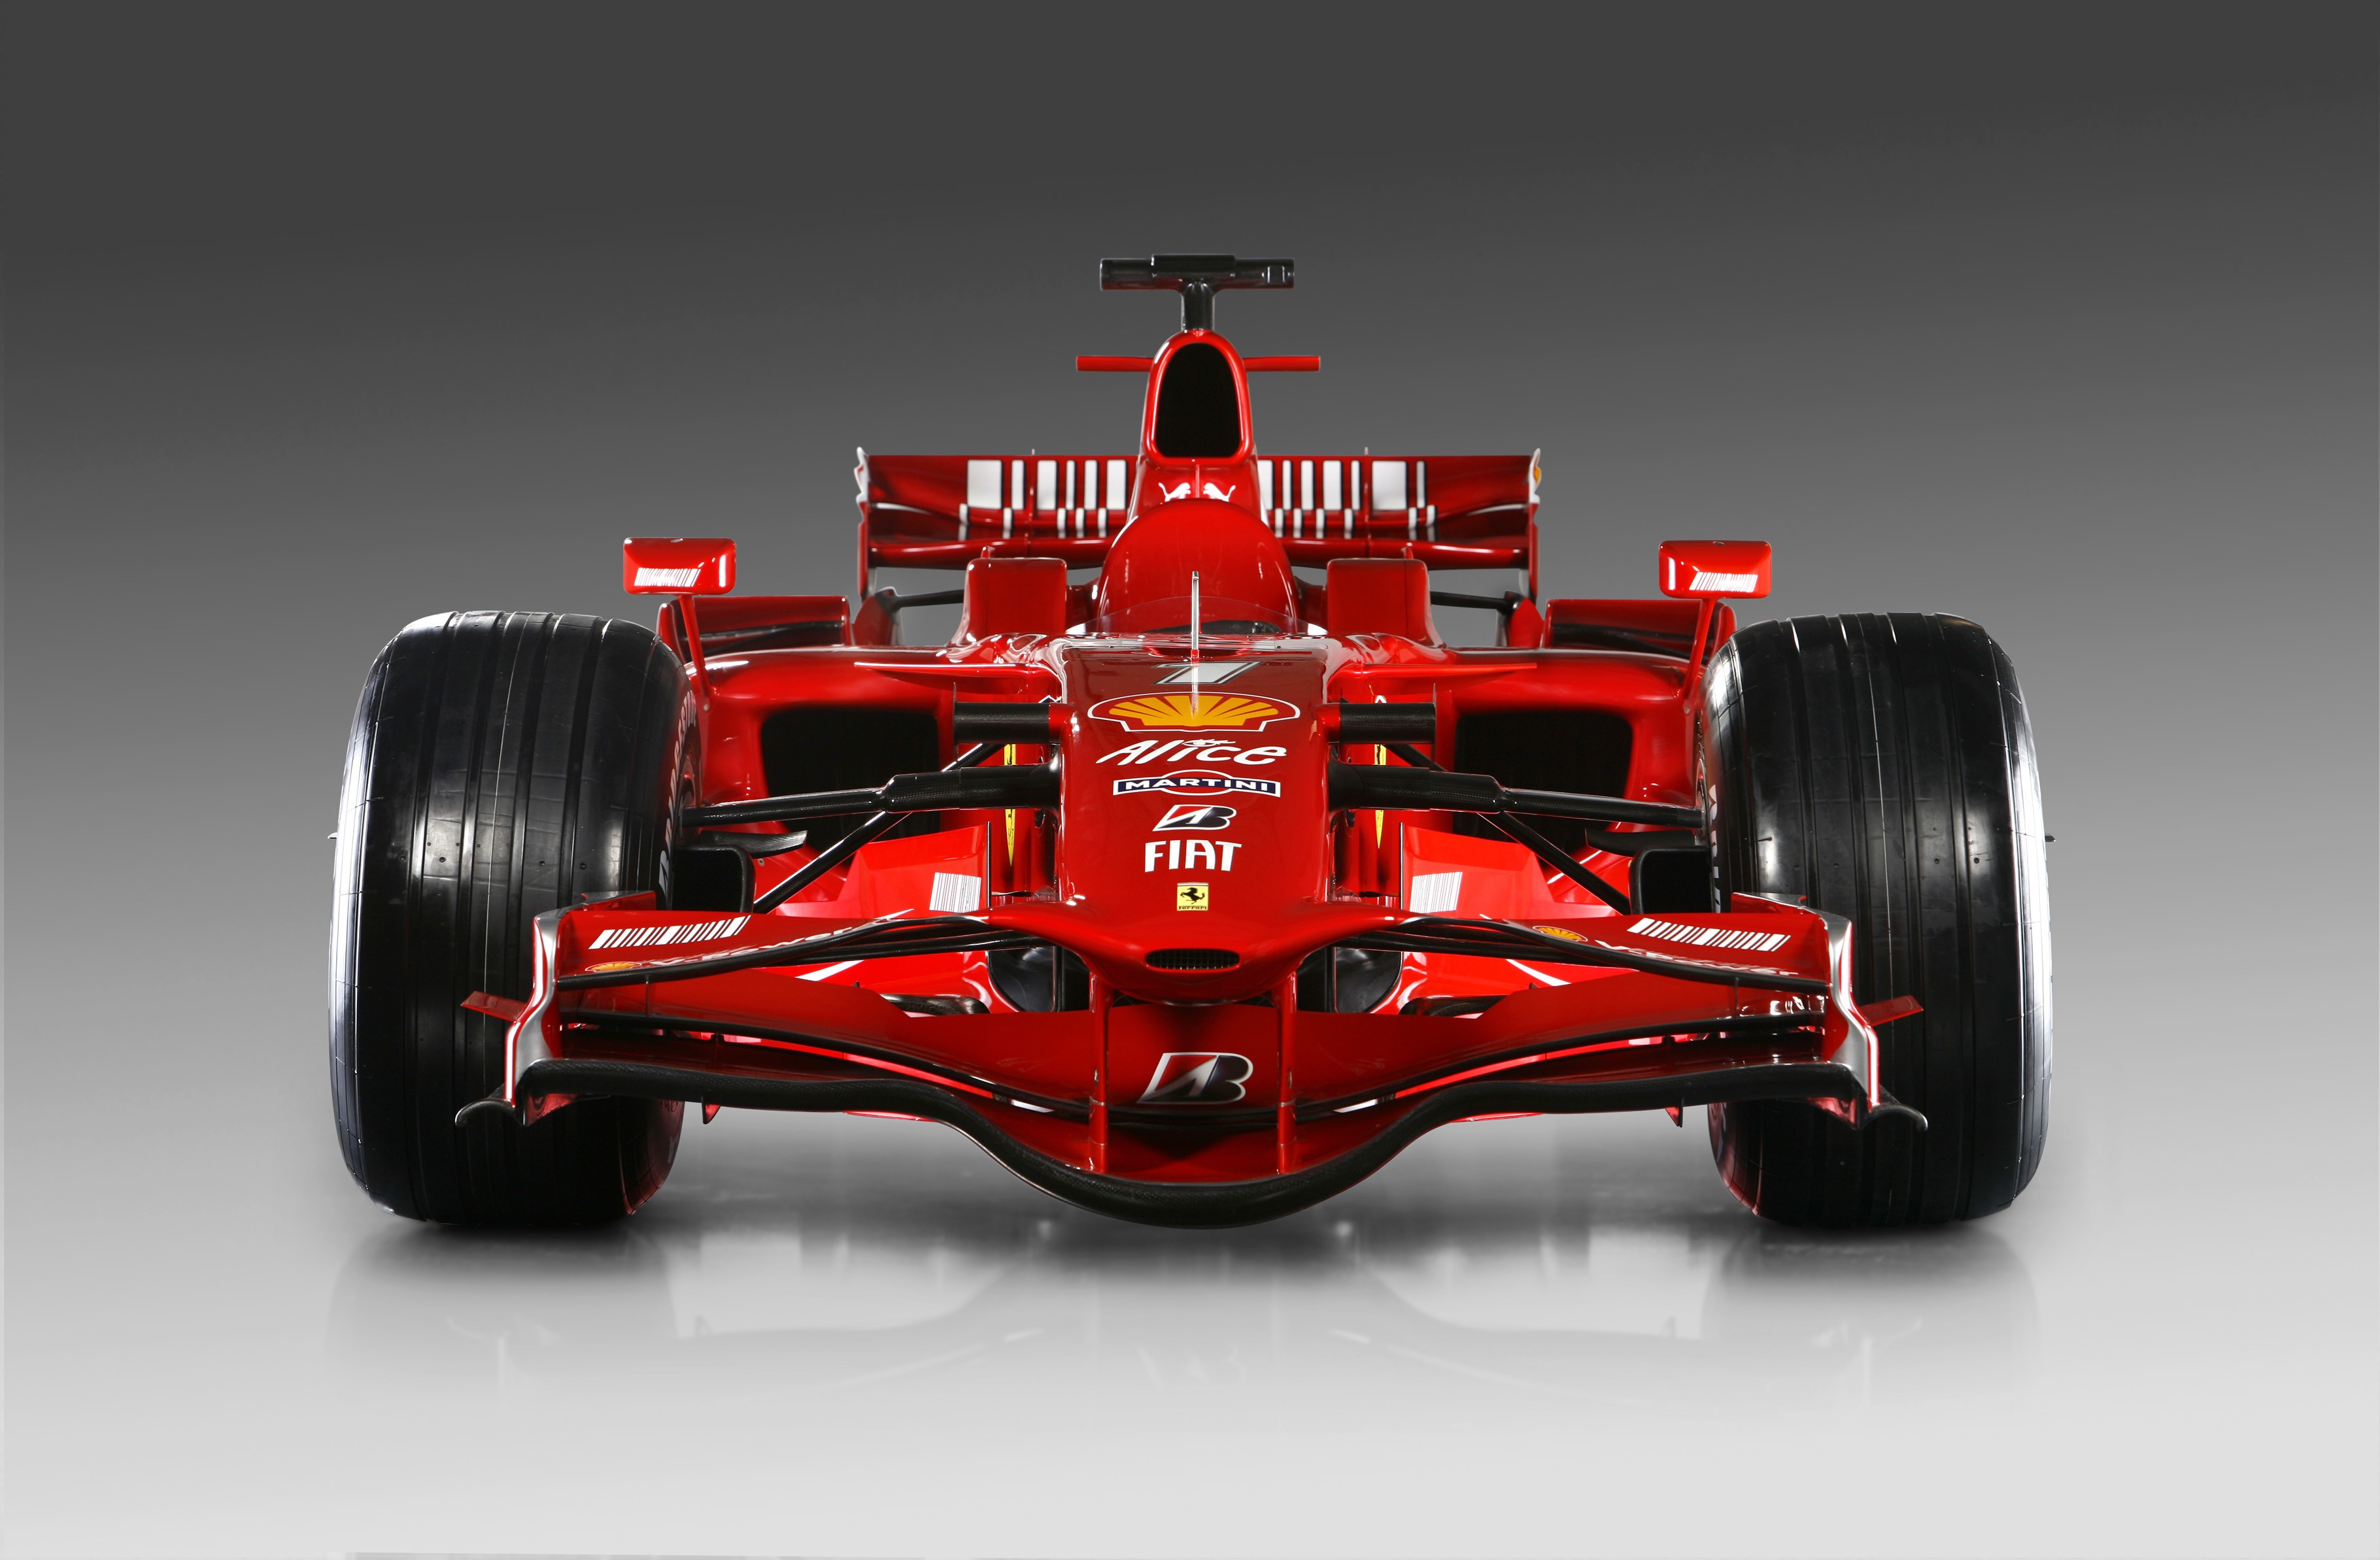 Wallpapers Ferrari motorsports cars on the desktop